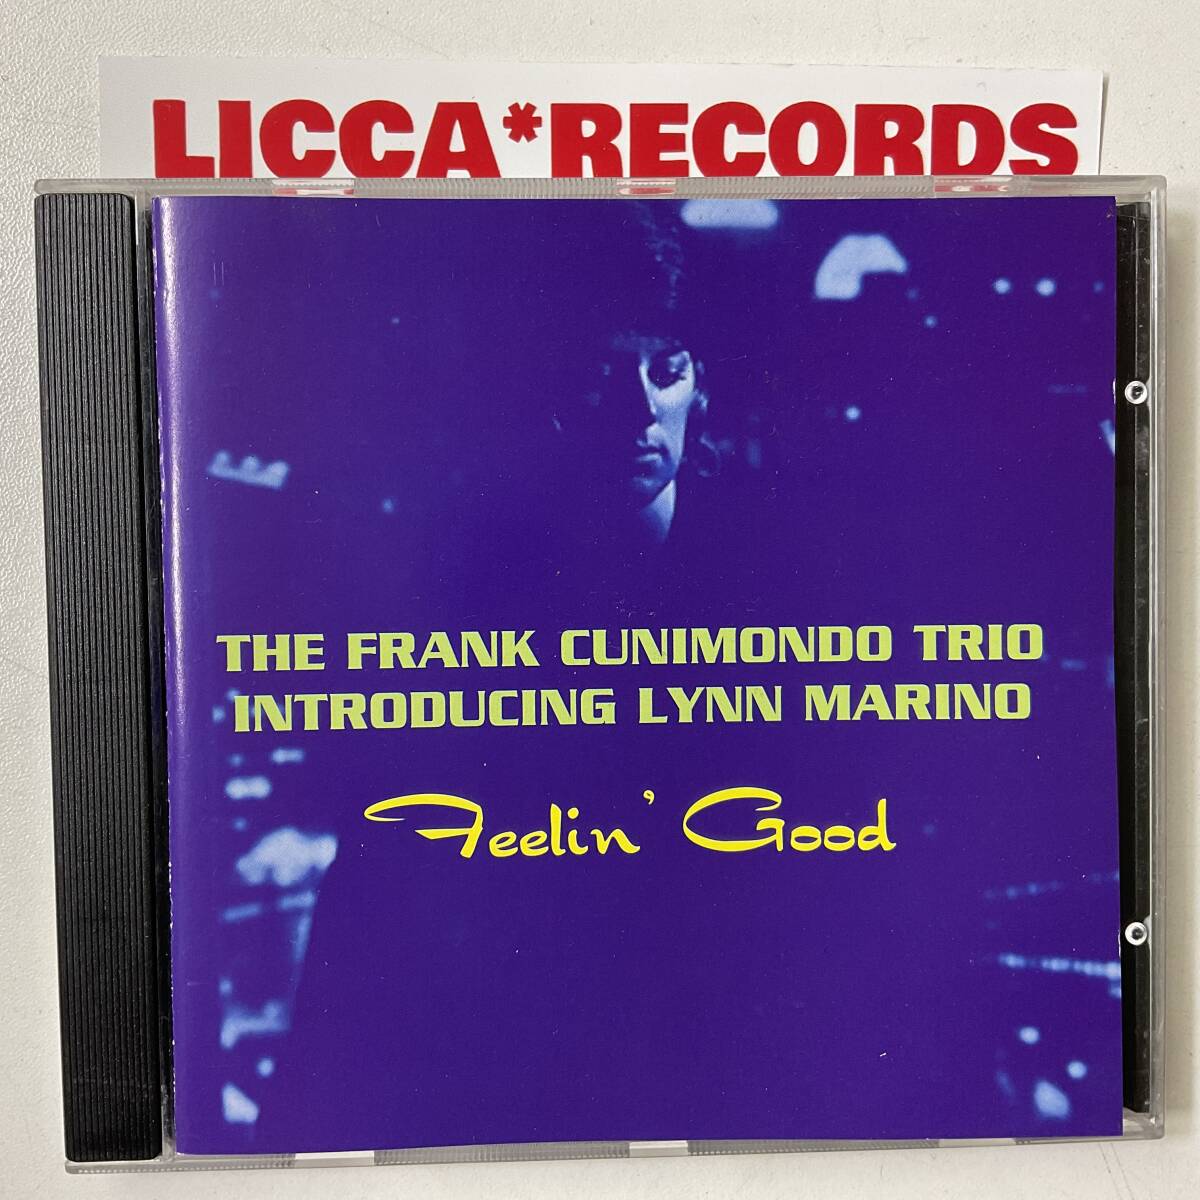 The Frank Cunimondo Trio Introducing Lynn Marino FEELIN GOOD Movieplay Music MPV100401 EU 1997 RARE CD LICCA*RECORDS 475 入手困難_画像1